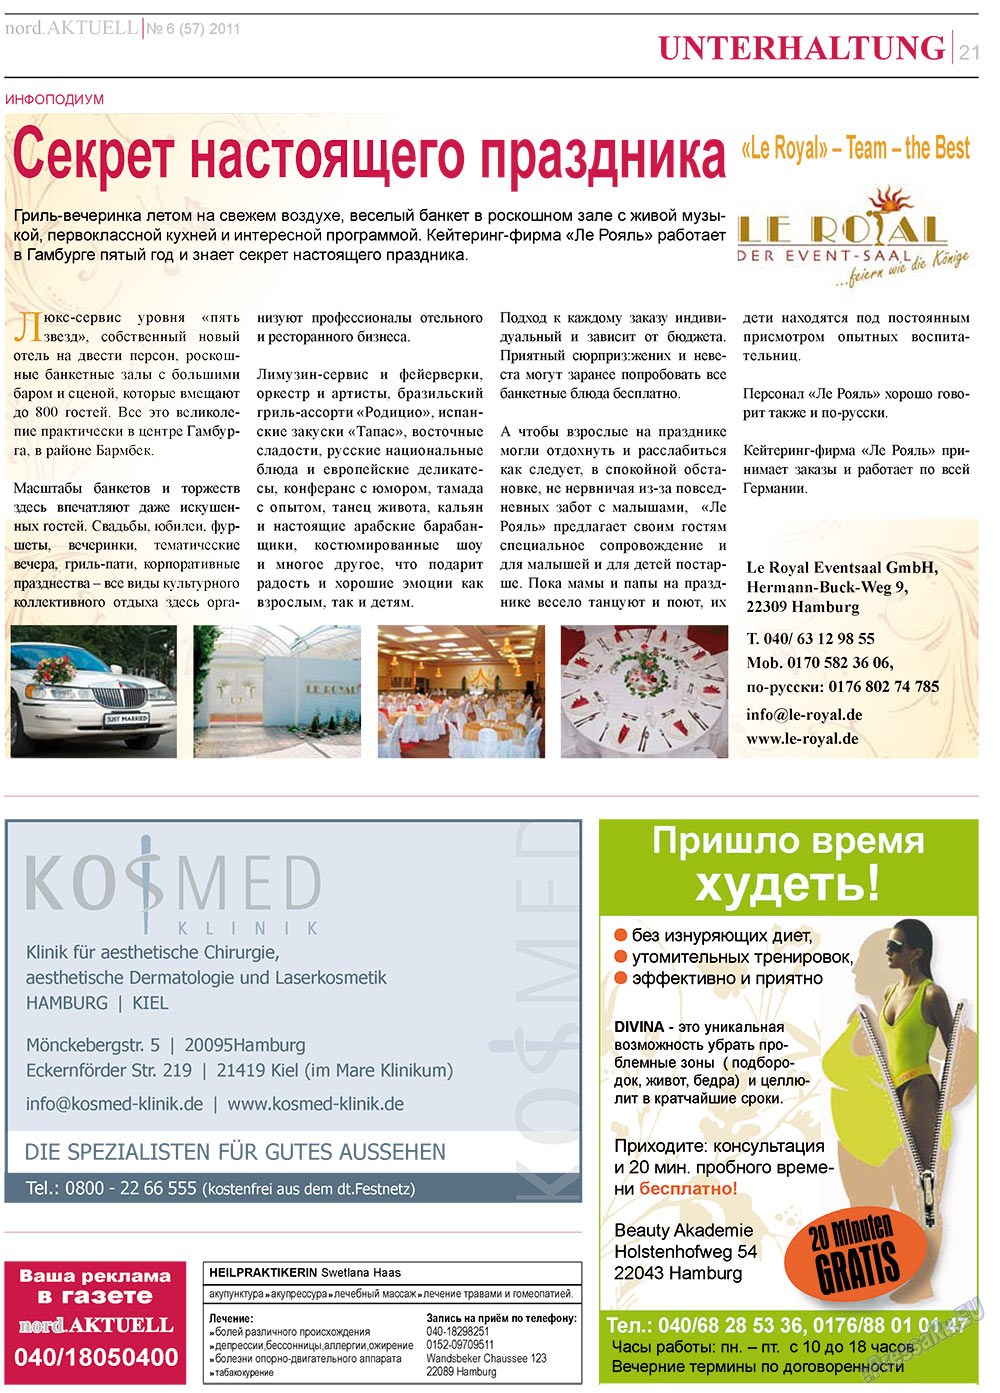 nord.Aktuell, газета. 2011 №6 стр.21